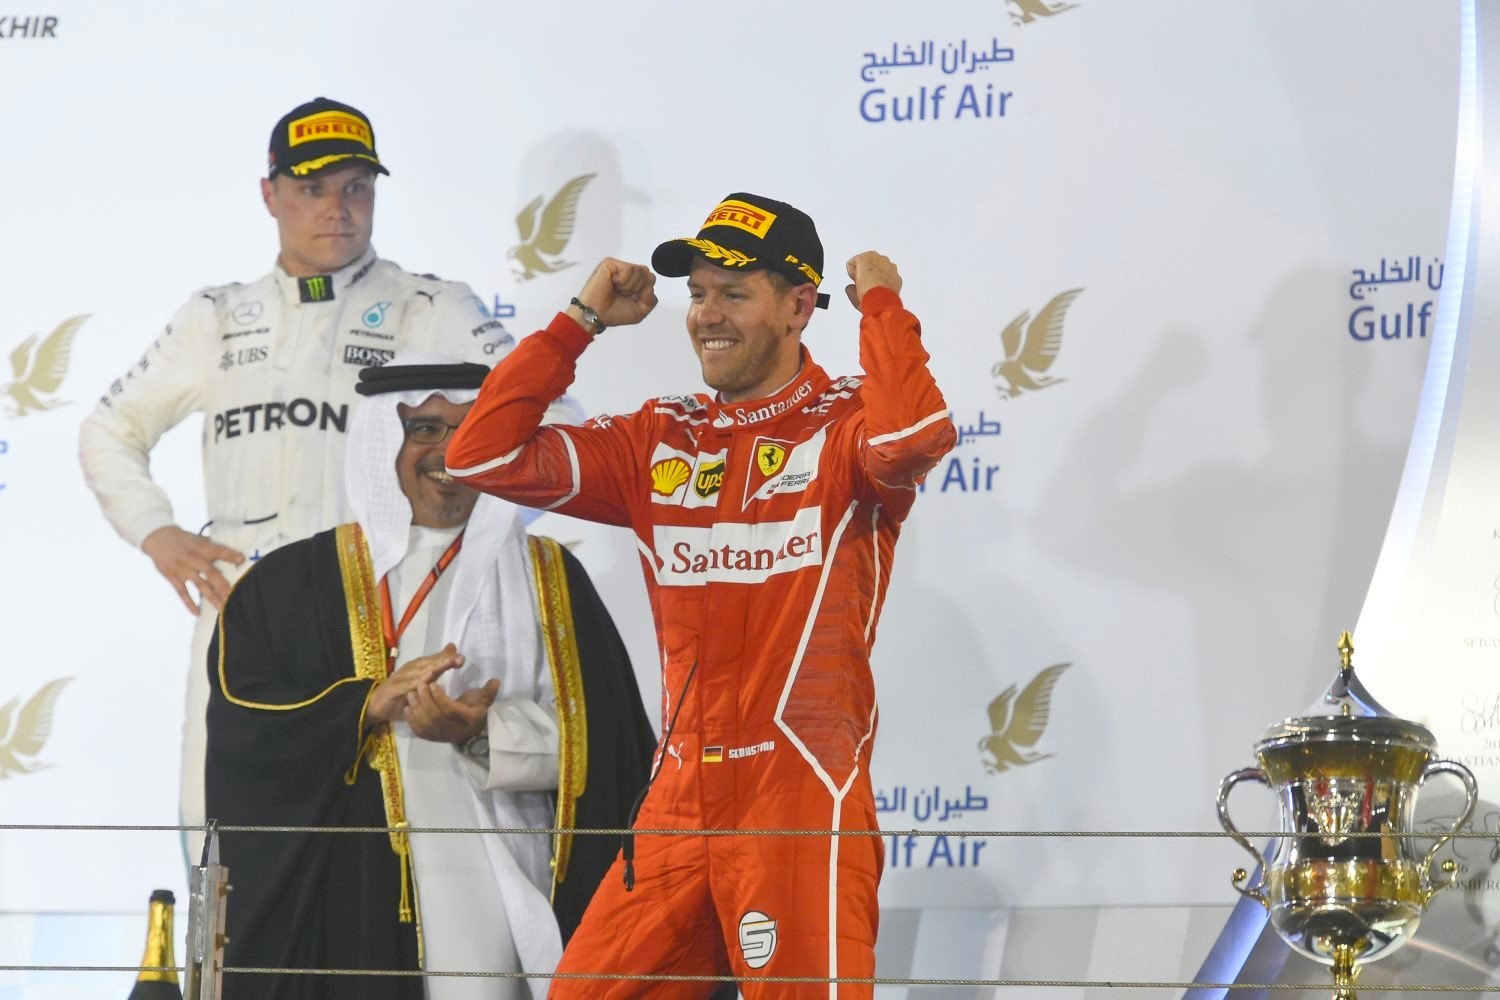 Can Vettel win again in Bahrain